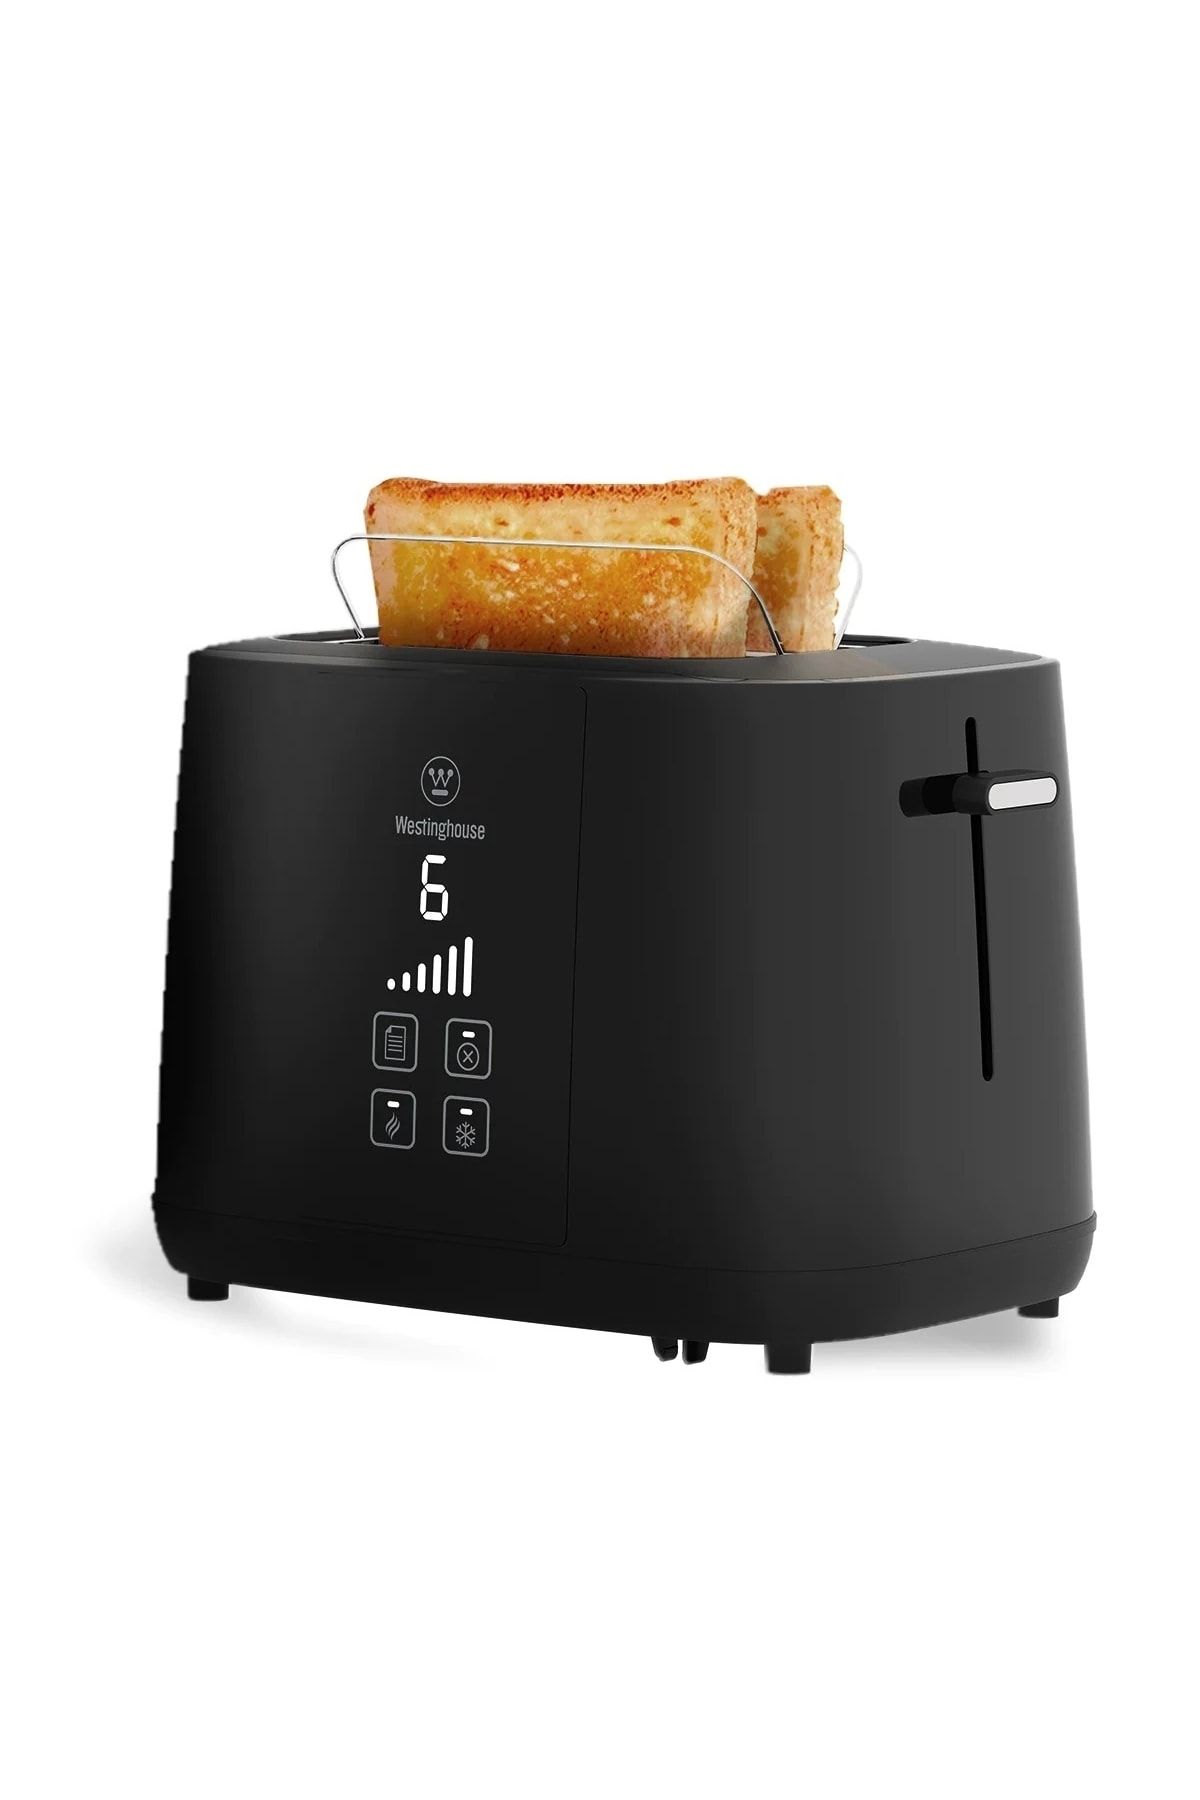 Westinghouse Ekmek Kızartma Makinesi - 2 Slice Toaster Siyah